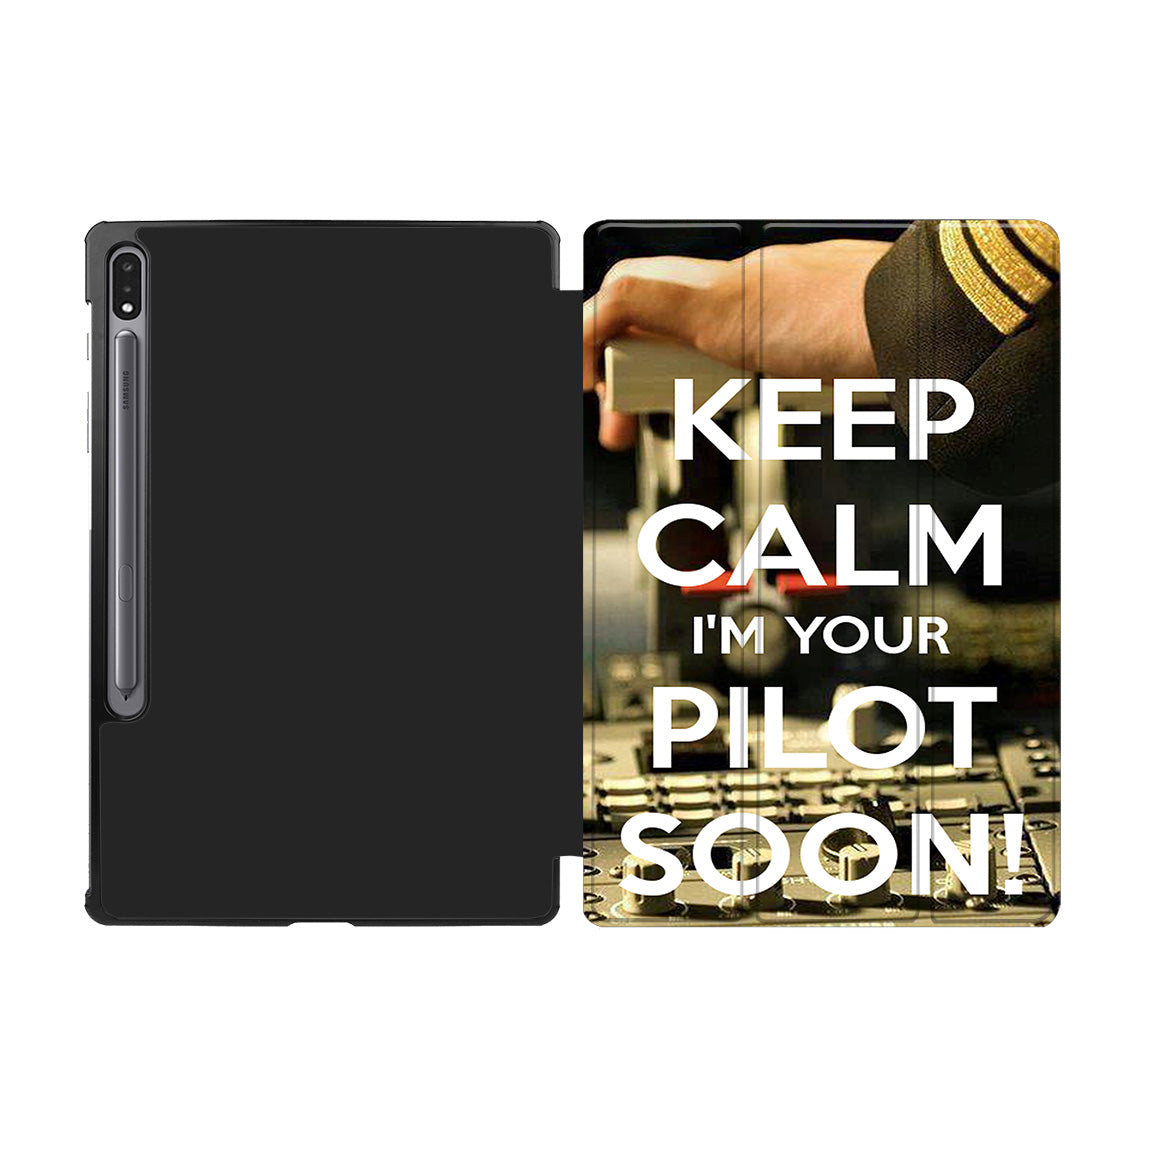 Keep Calm I'm your Pilot Soon Designed Samsung Tablet Cases